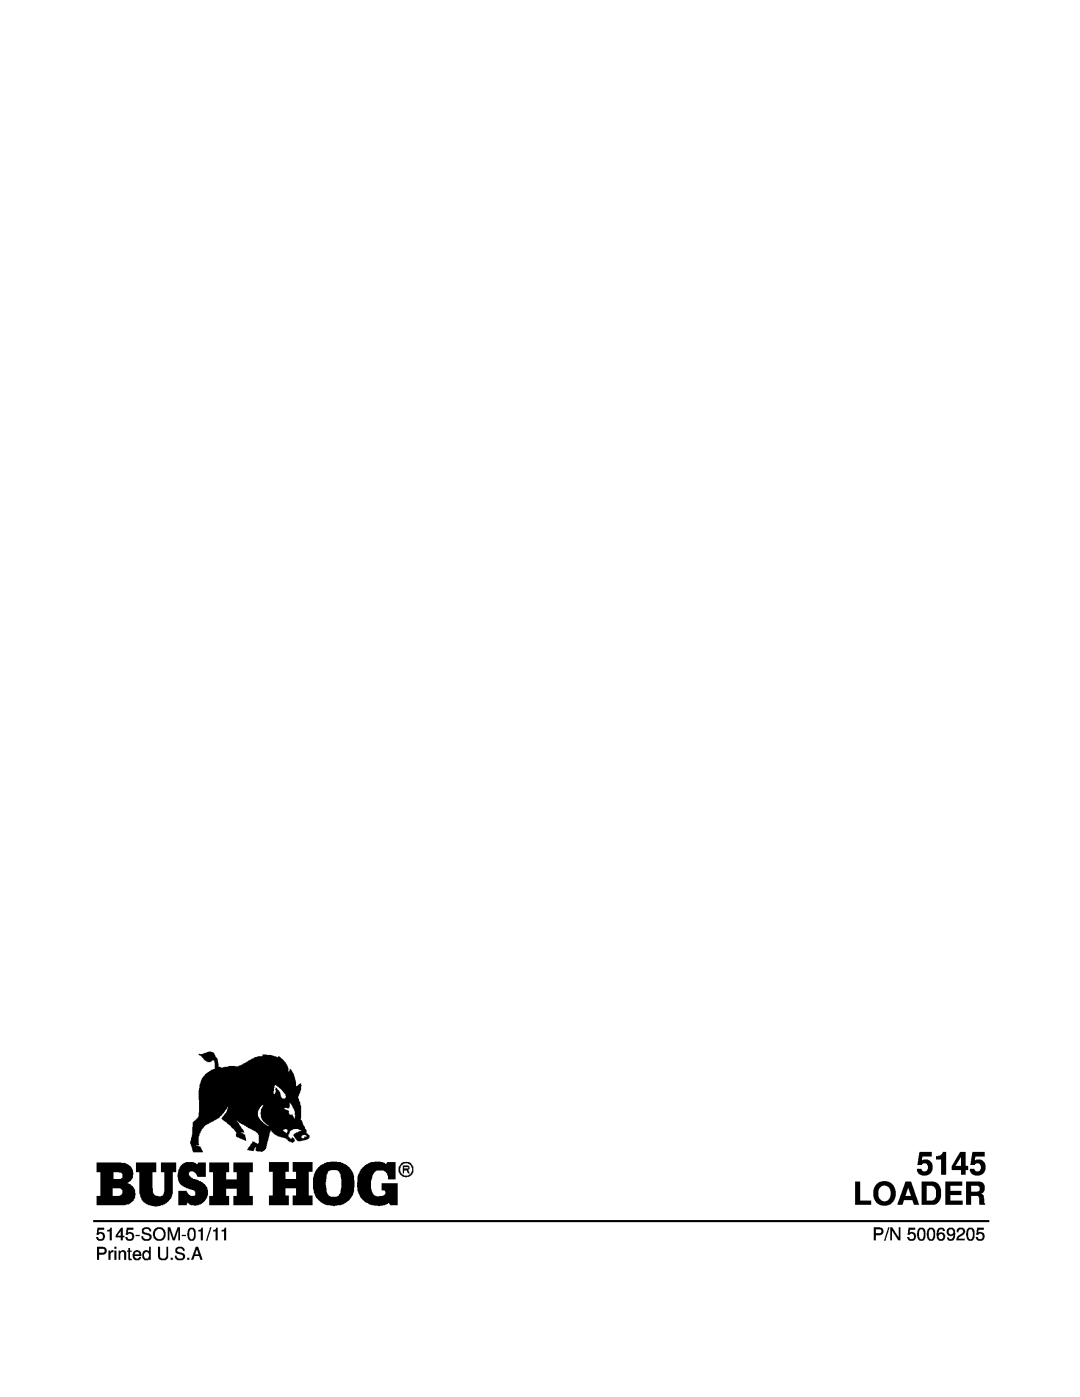 Bush Hog 5145 manual Loader, SOM-01/11, Printed U.S.A 